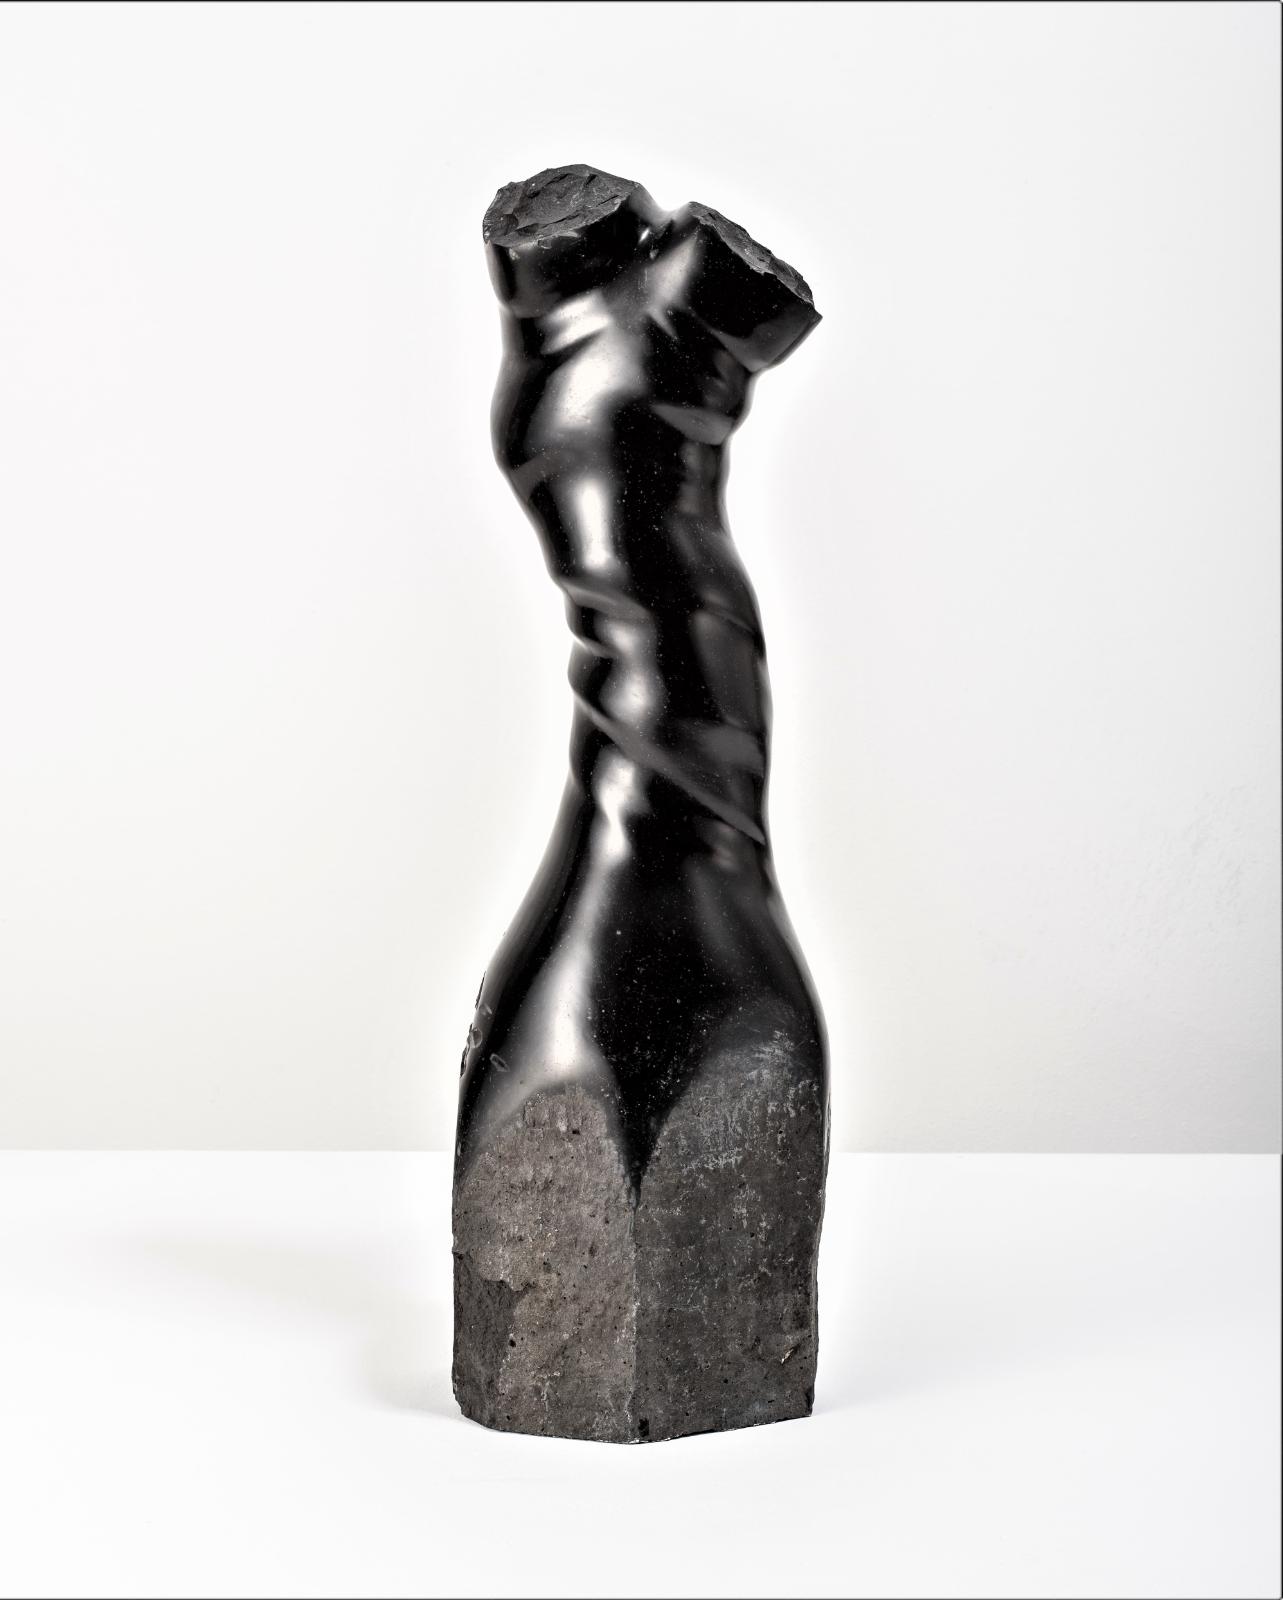 Christoph Traub, Körper, bewegt, 2018, Basalt ,55 x 15 x 18 cm, trc005ko